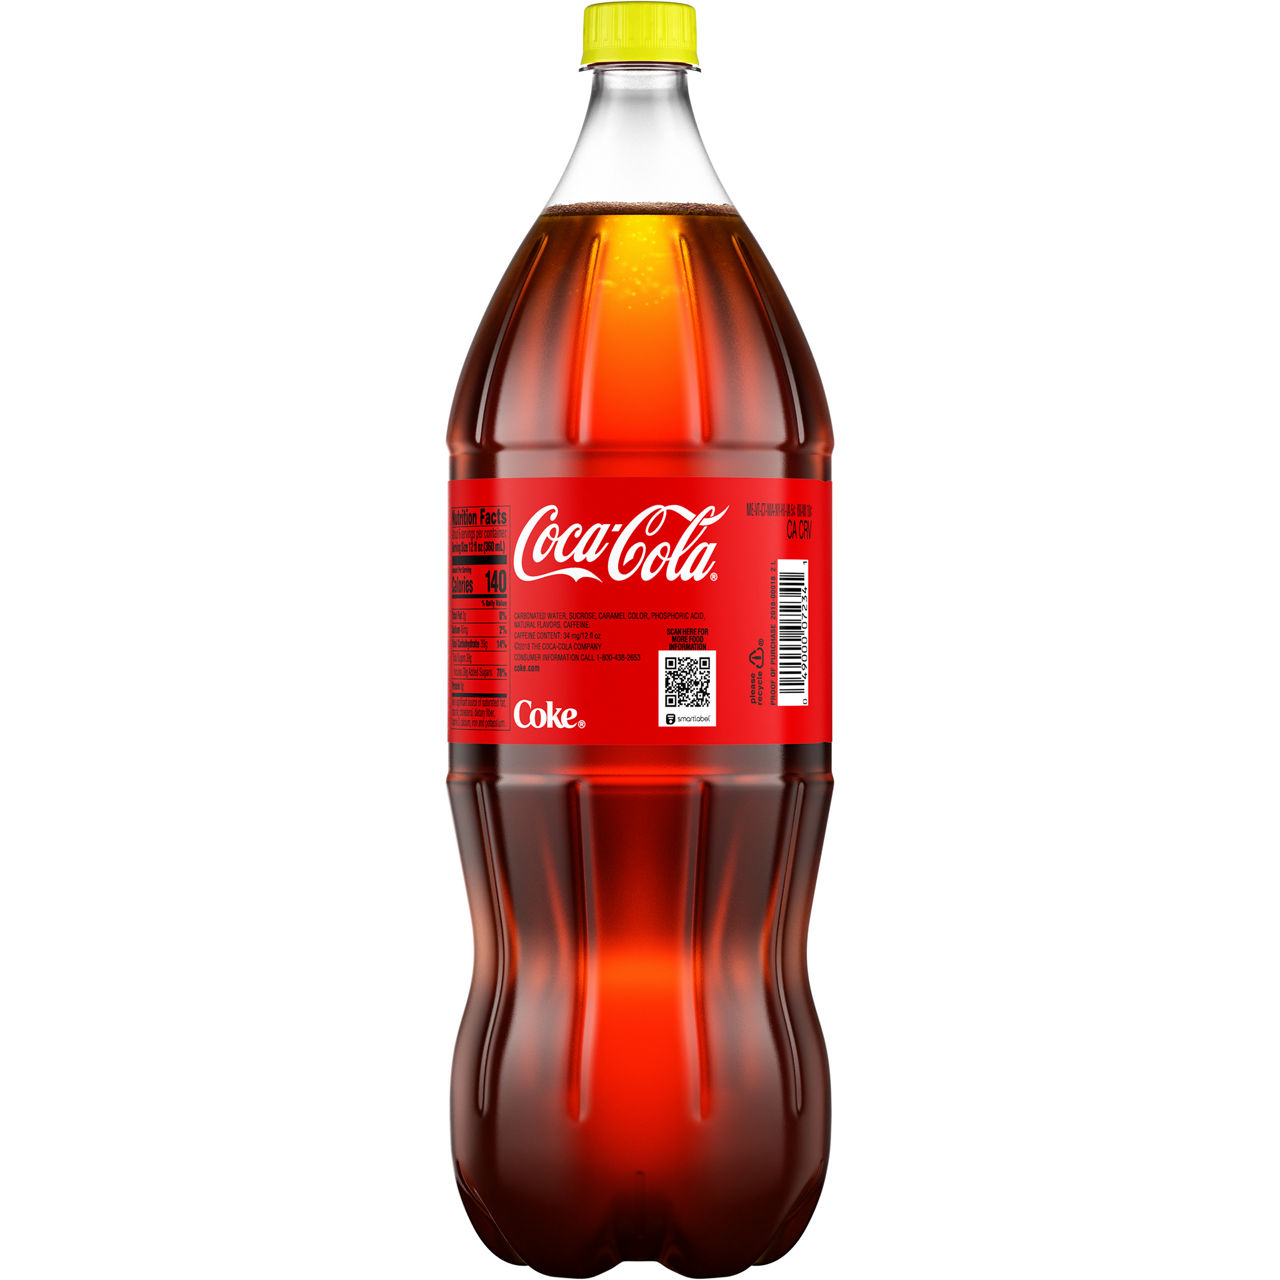  Coca-Cola Soda Soft Drink, 67.6 Fl Oz Bottle